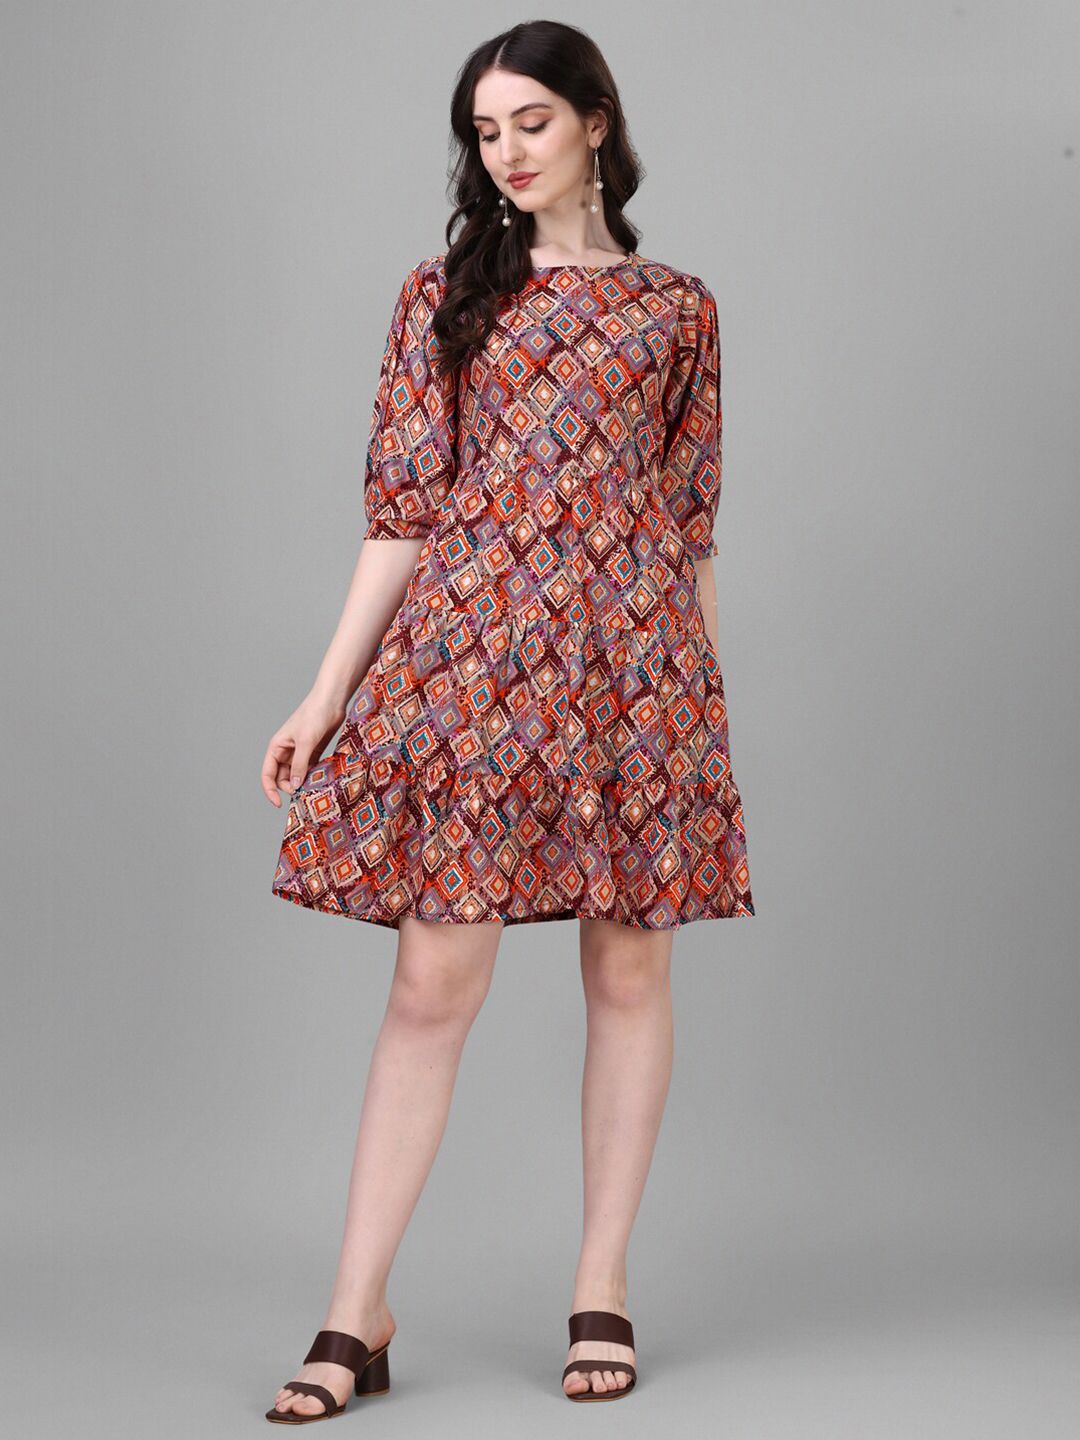 Kinjo Geometric Printed A-Line Dress Price in India